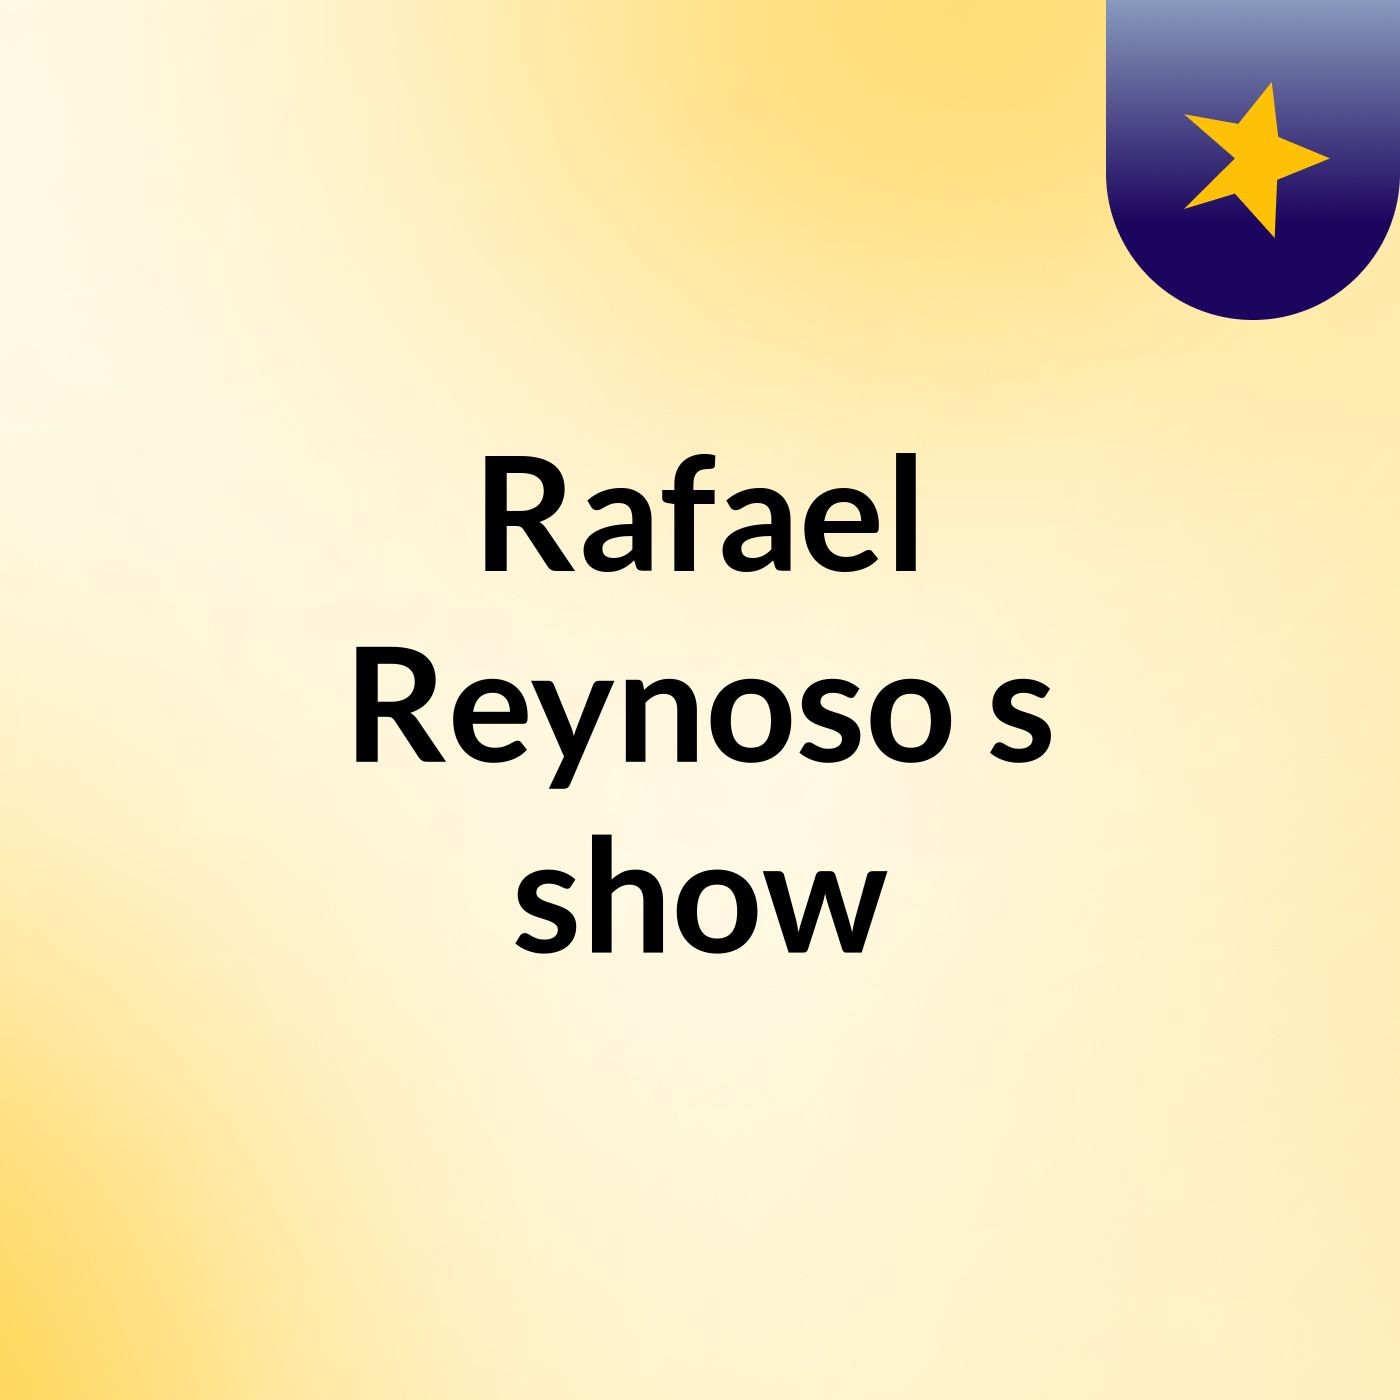 Episode 6 - Rafael Reynoso's show